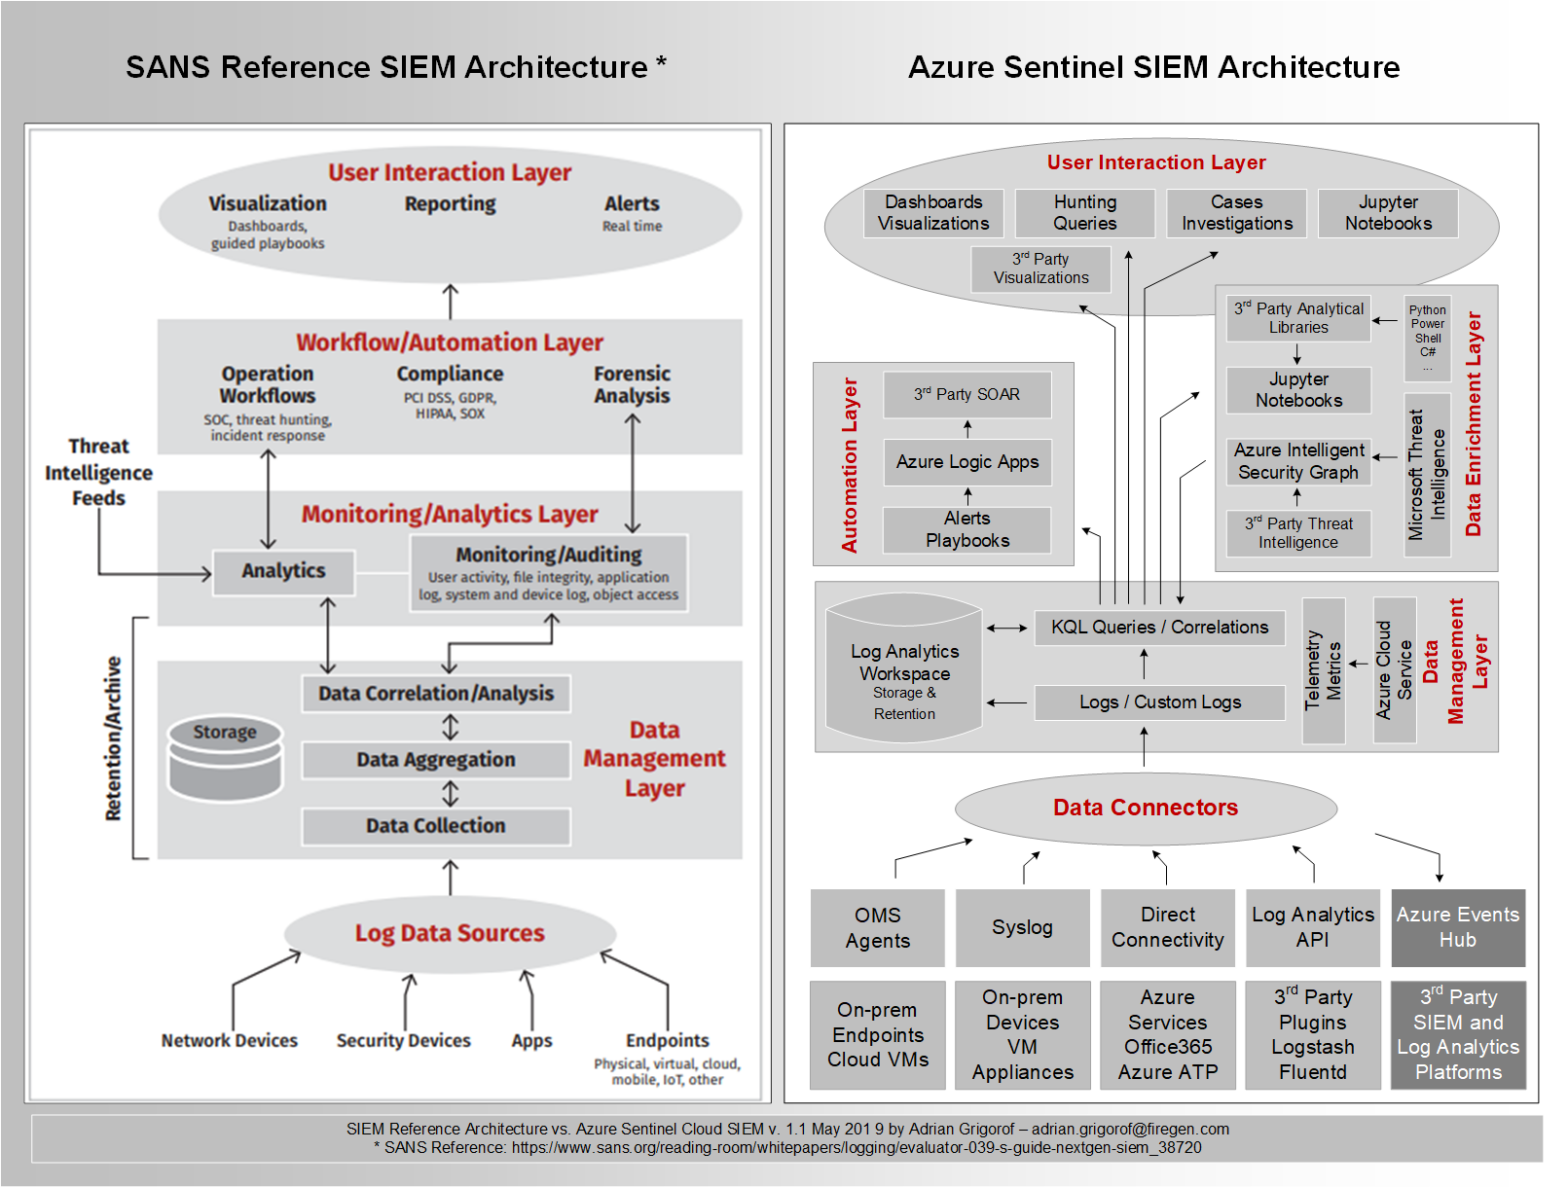 Azure Sentinel cloud SIEM architecture vs. traditional SIEM platforms